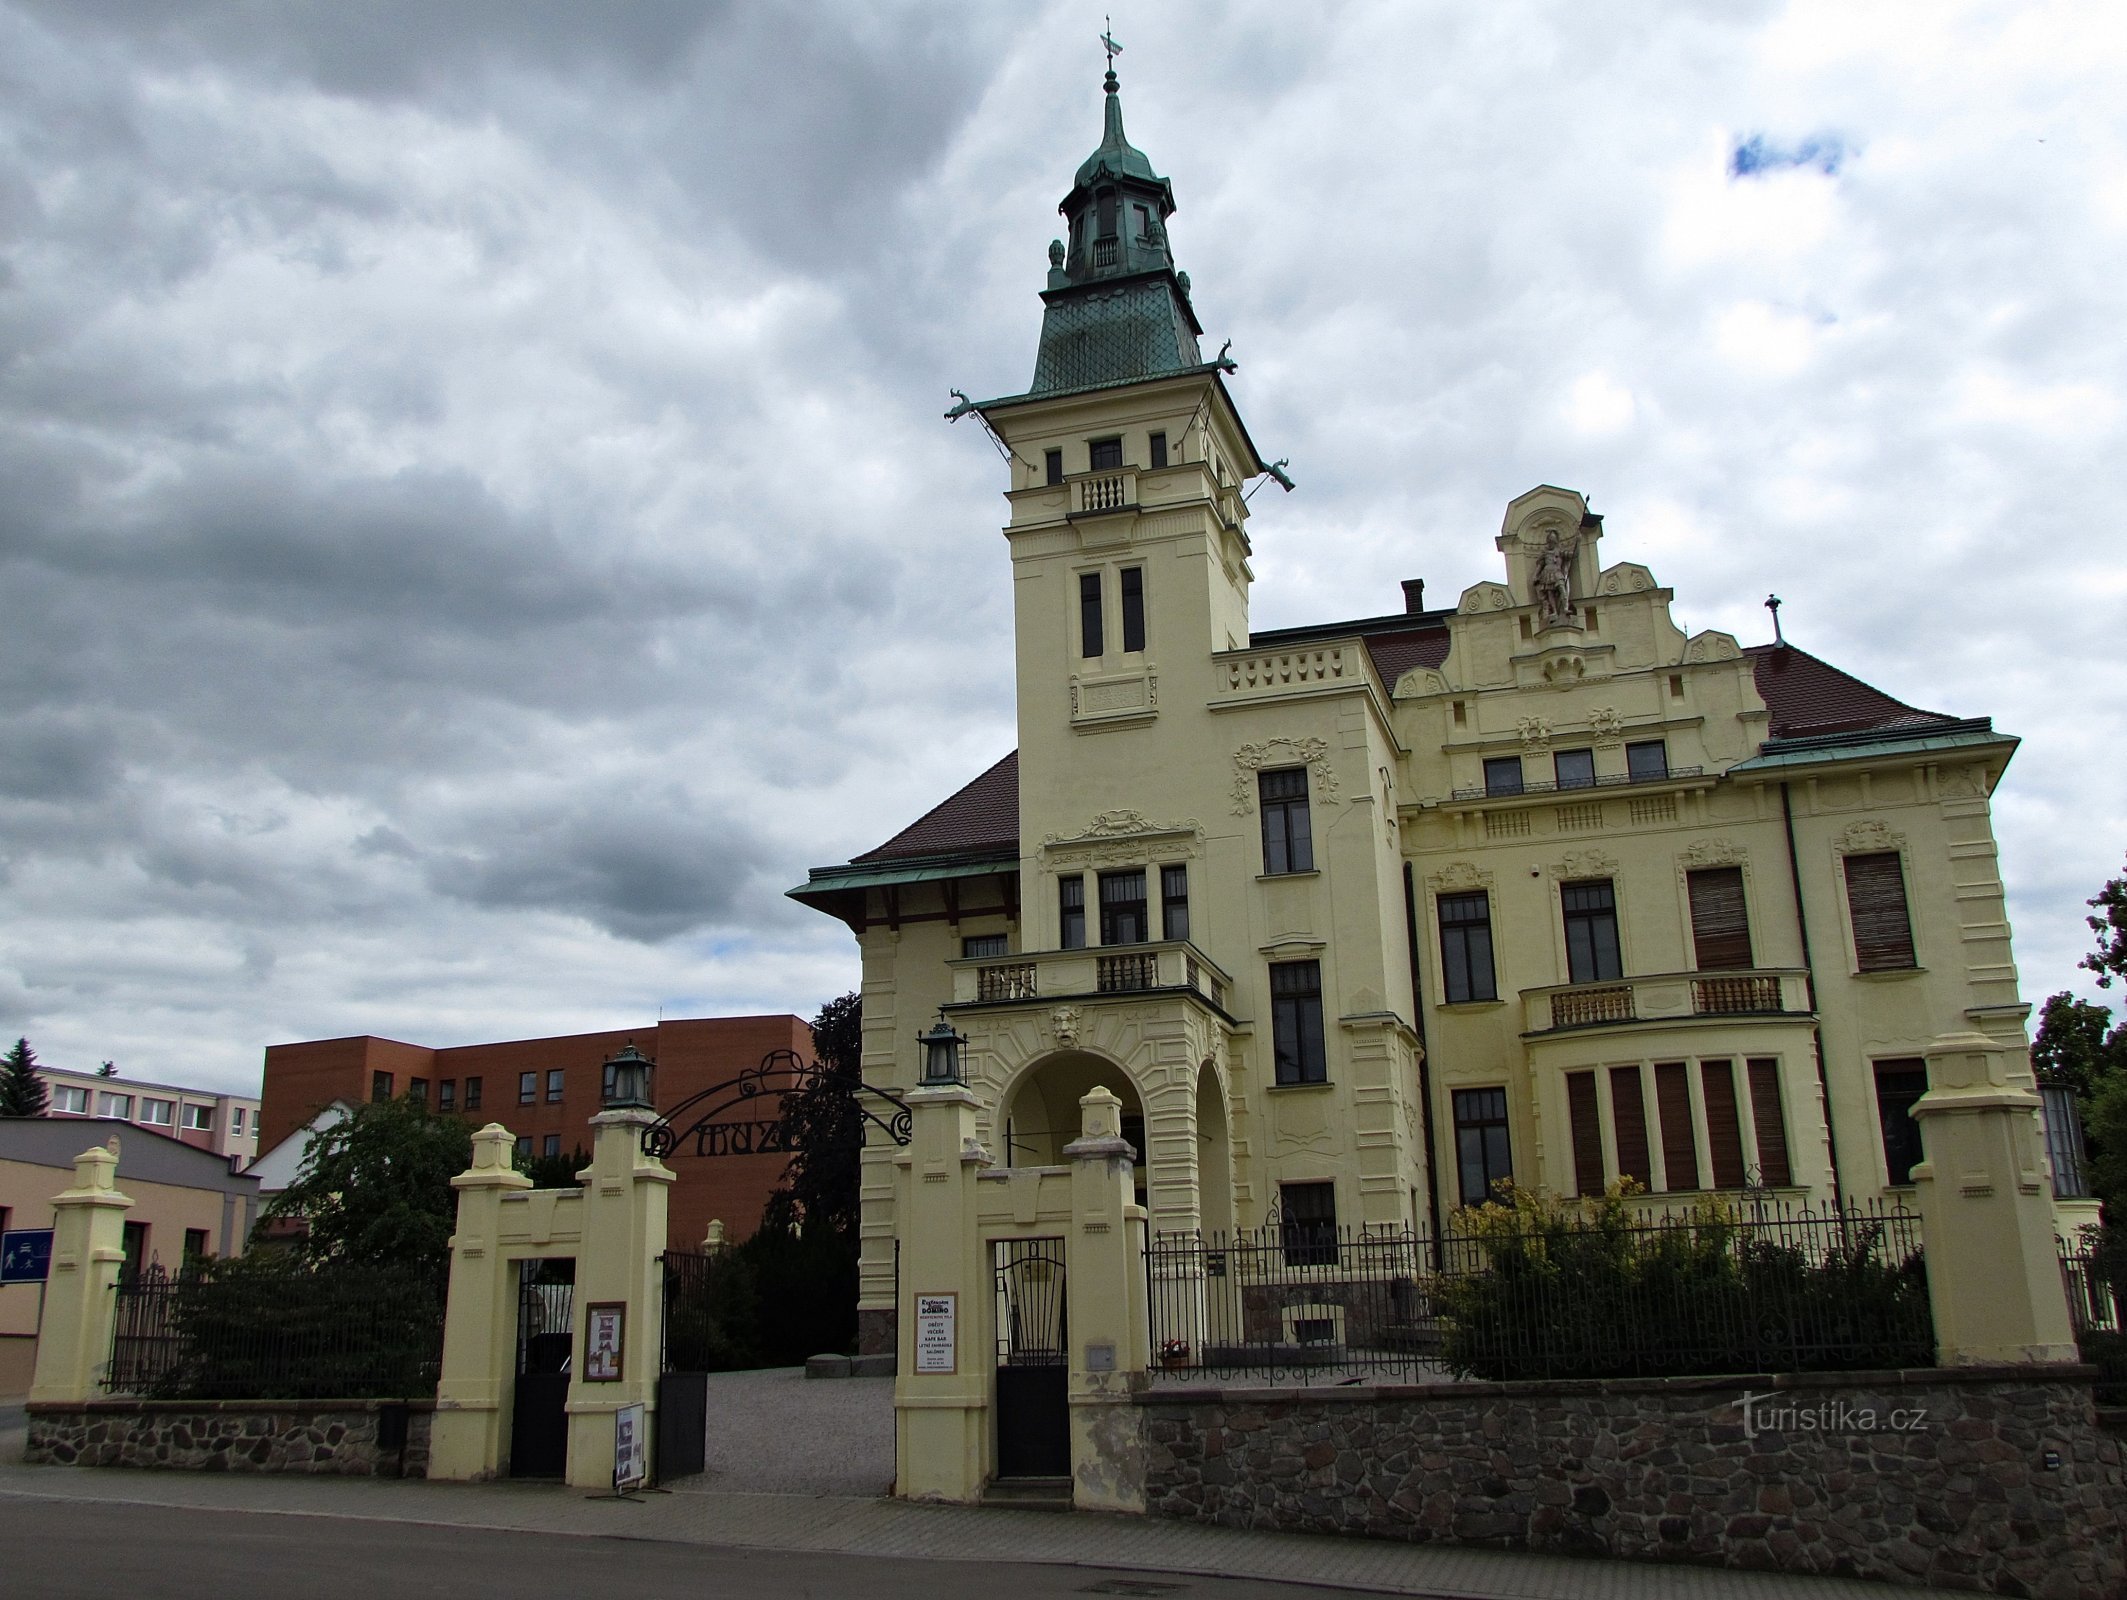 Ústí nad Orlicí - villaen til den største forretningsmand